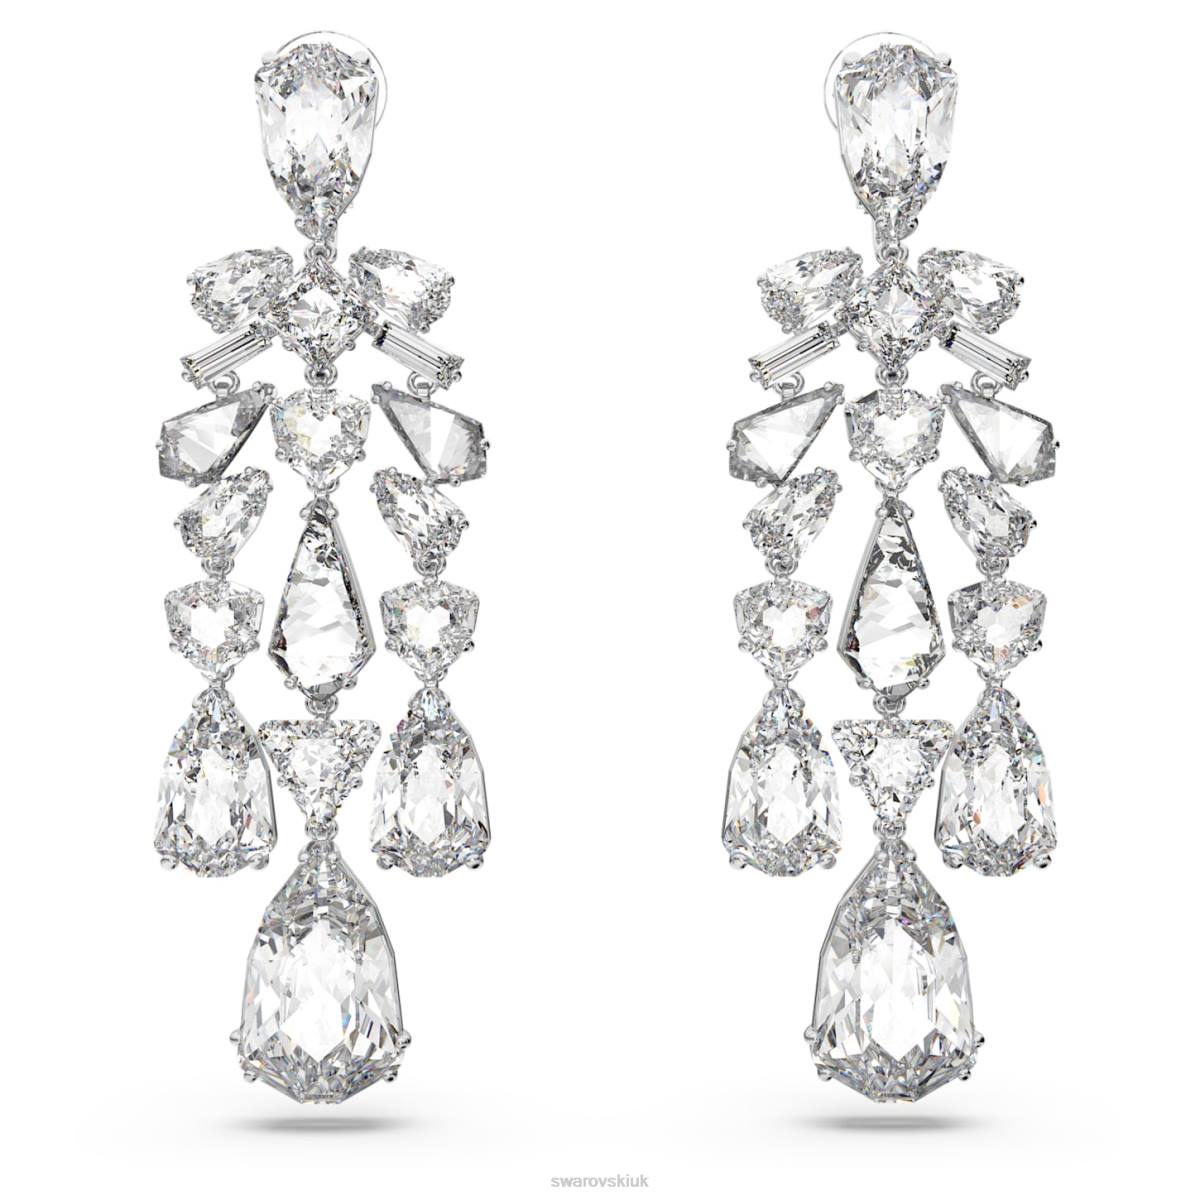 Jewelry Swarovski Mesmera clip earrings Mixed cuts, Chandelier, White, Rhodium plated 48JX951